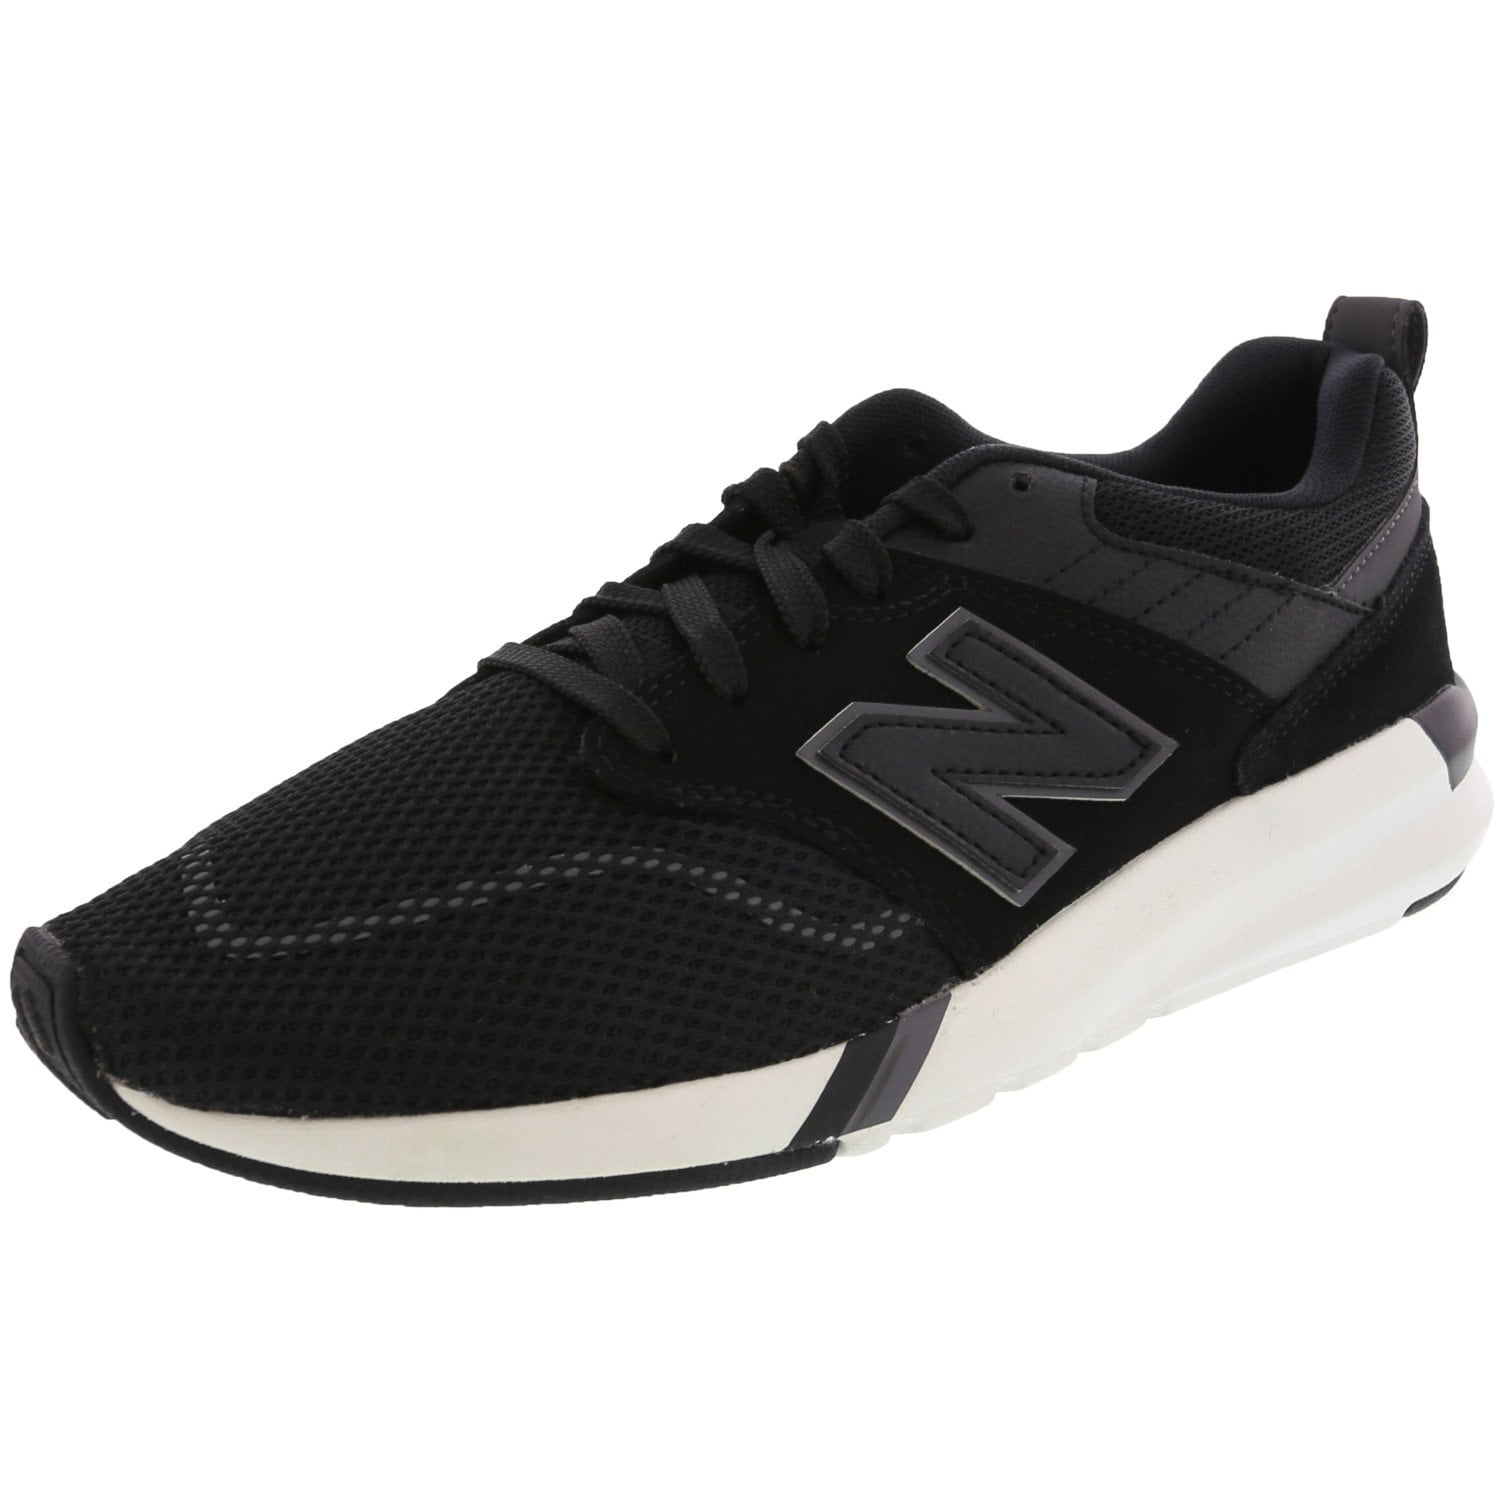 New Balance - New Balance Men's Ms009 Bk1 Ankle-High Mesh Tennis Shoe ...